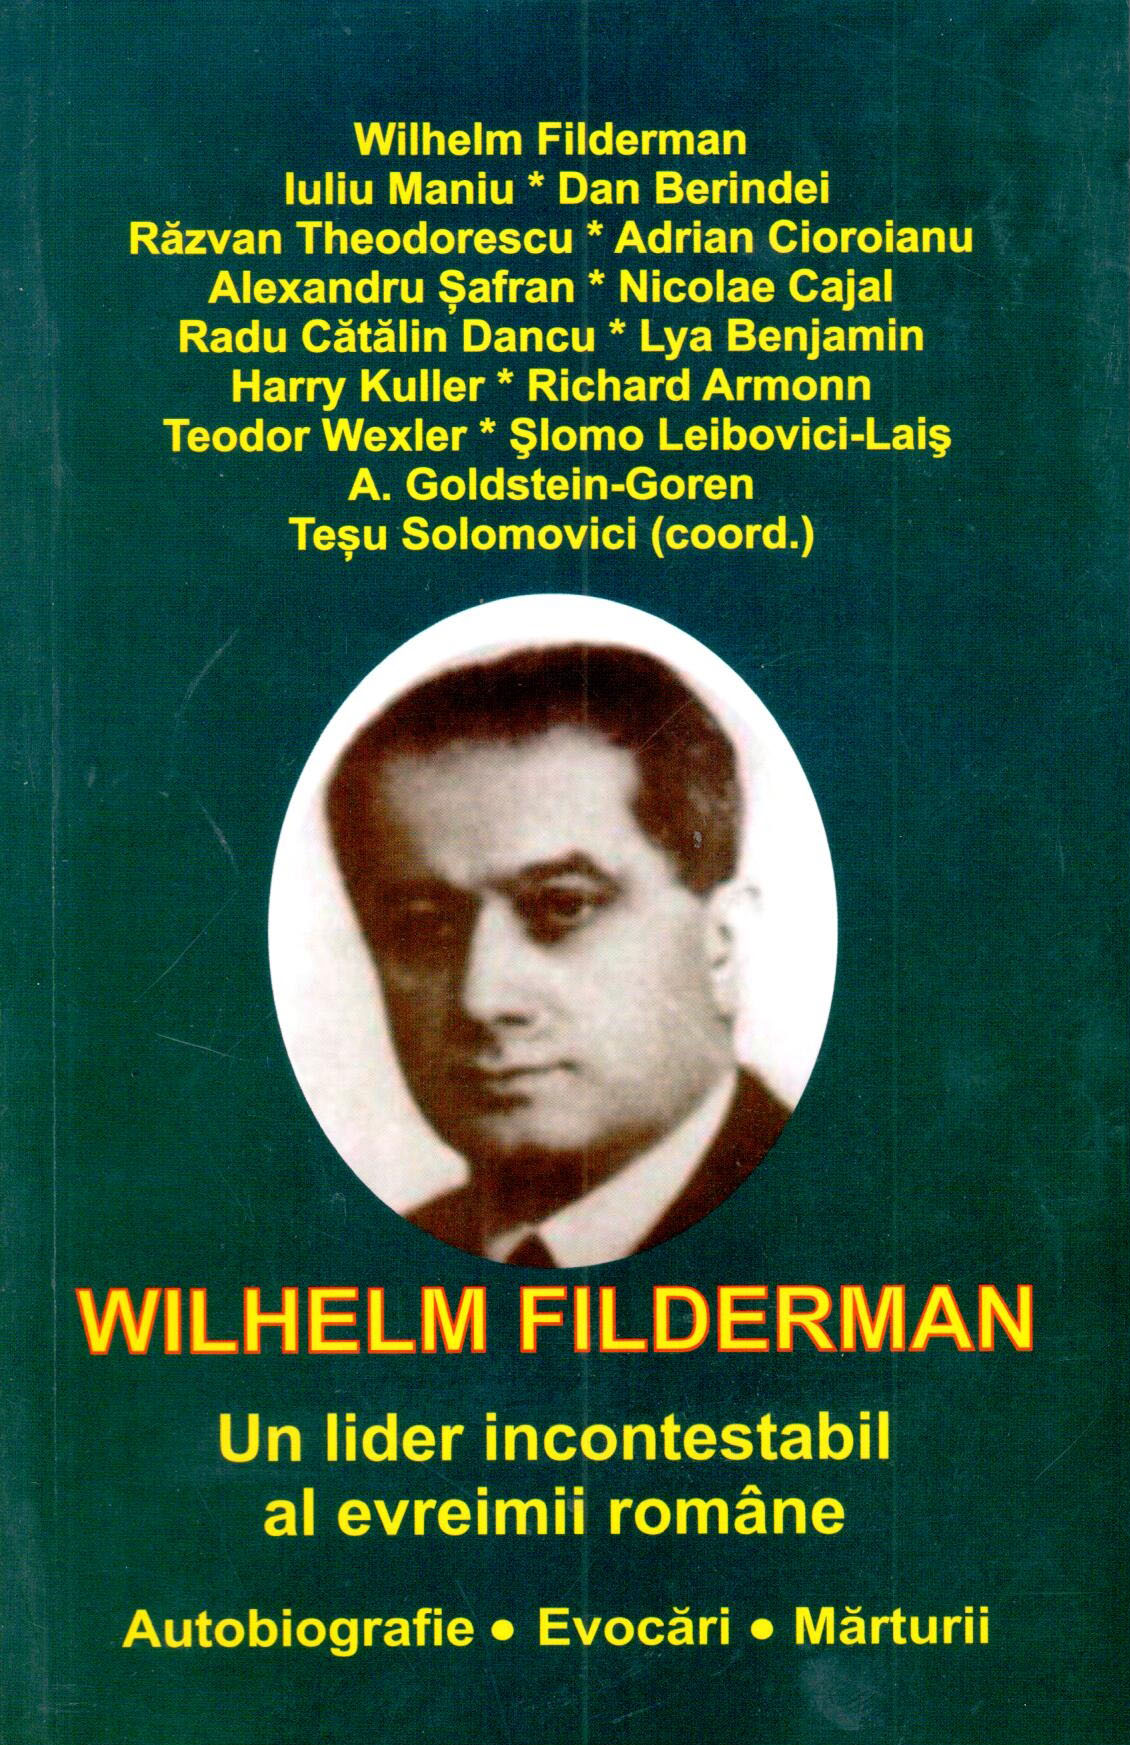 Wilhem Filderman